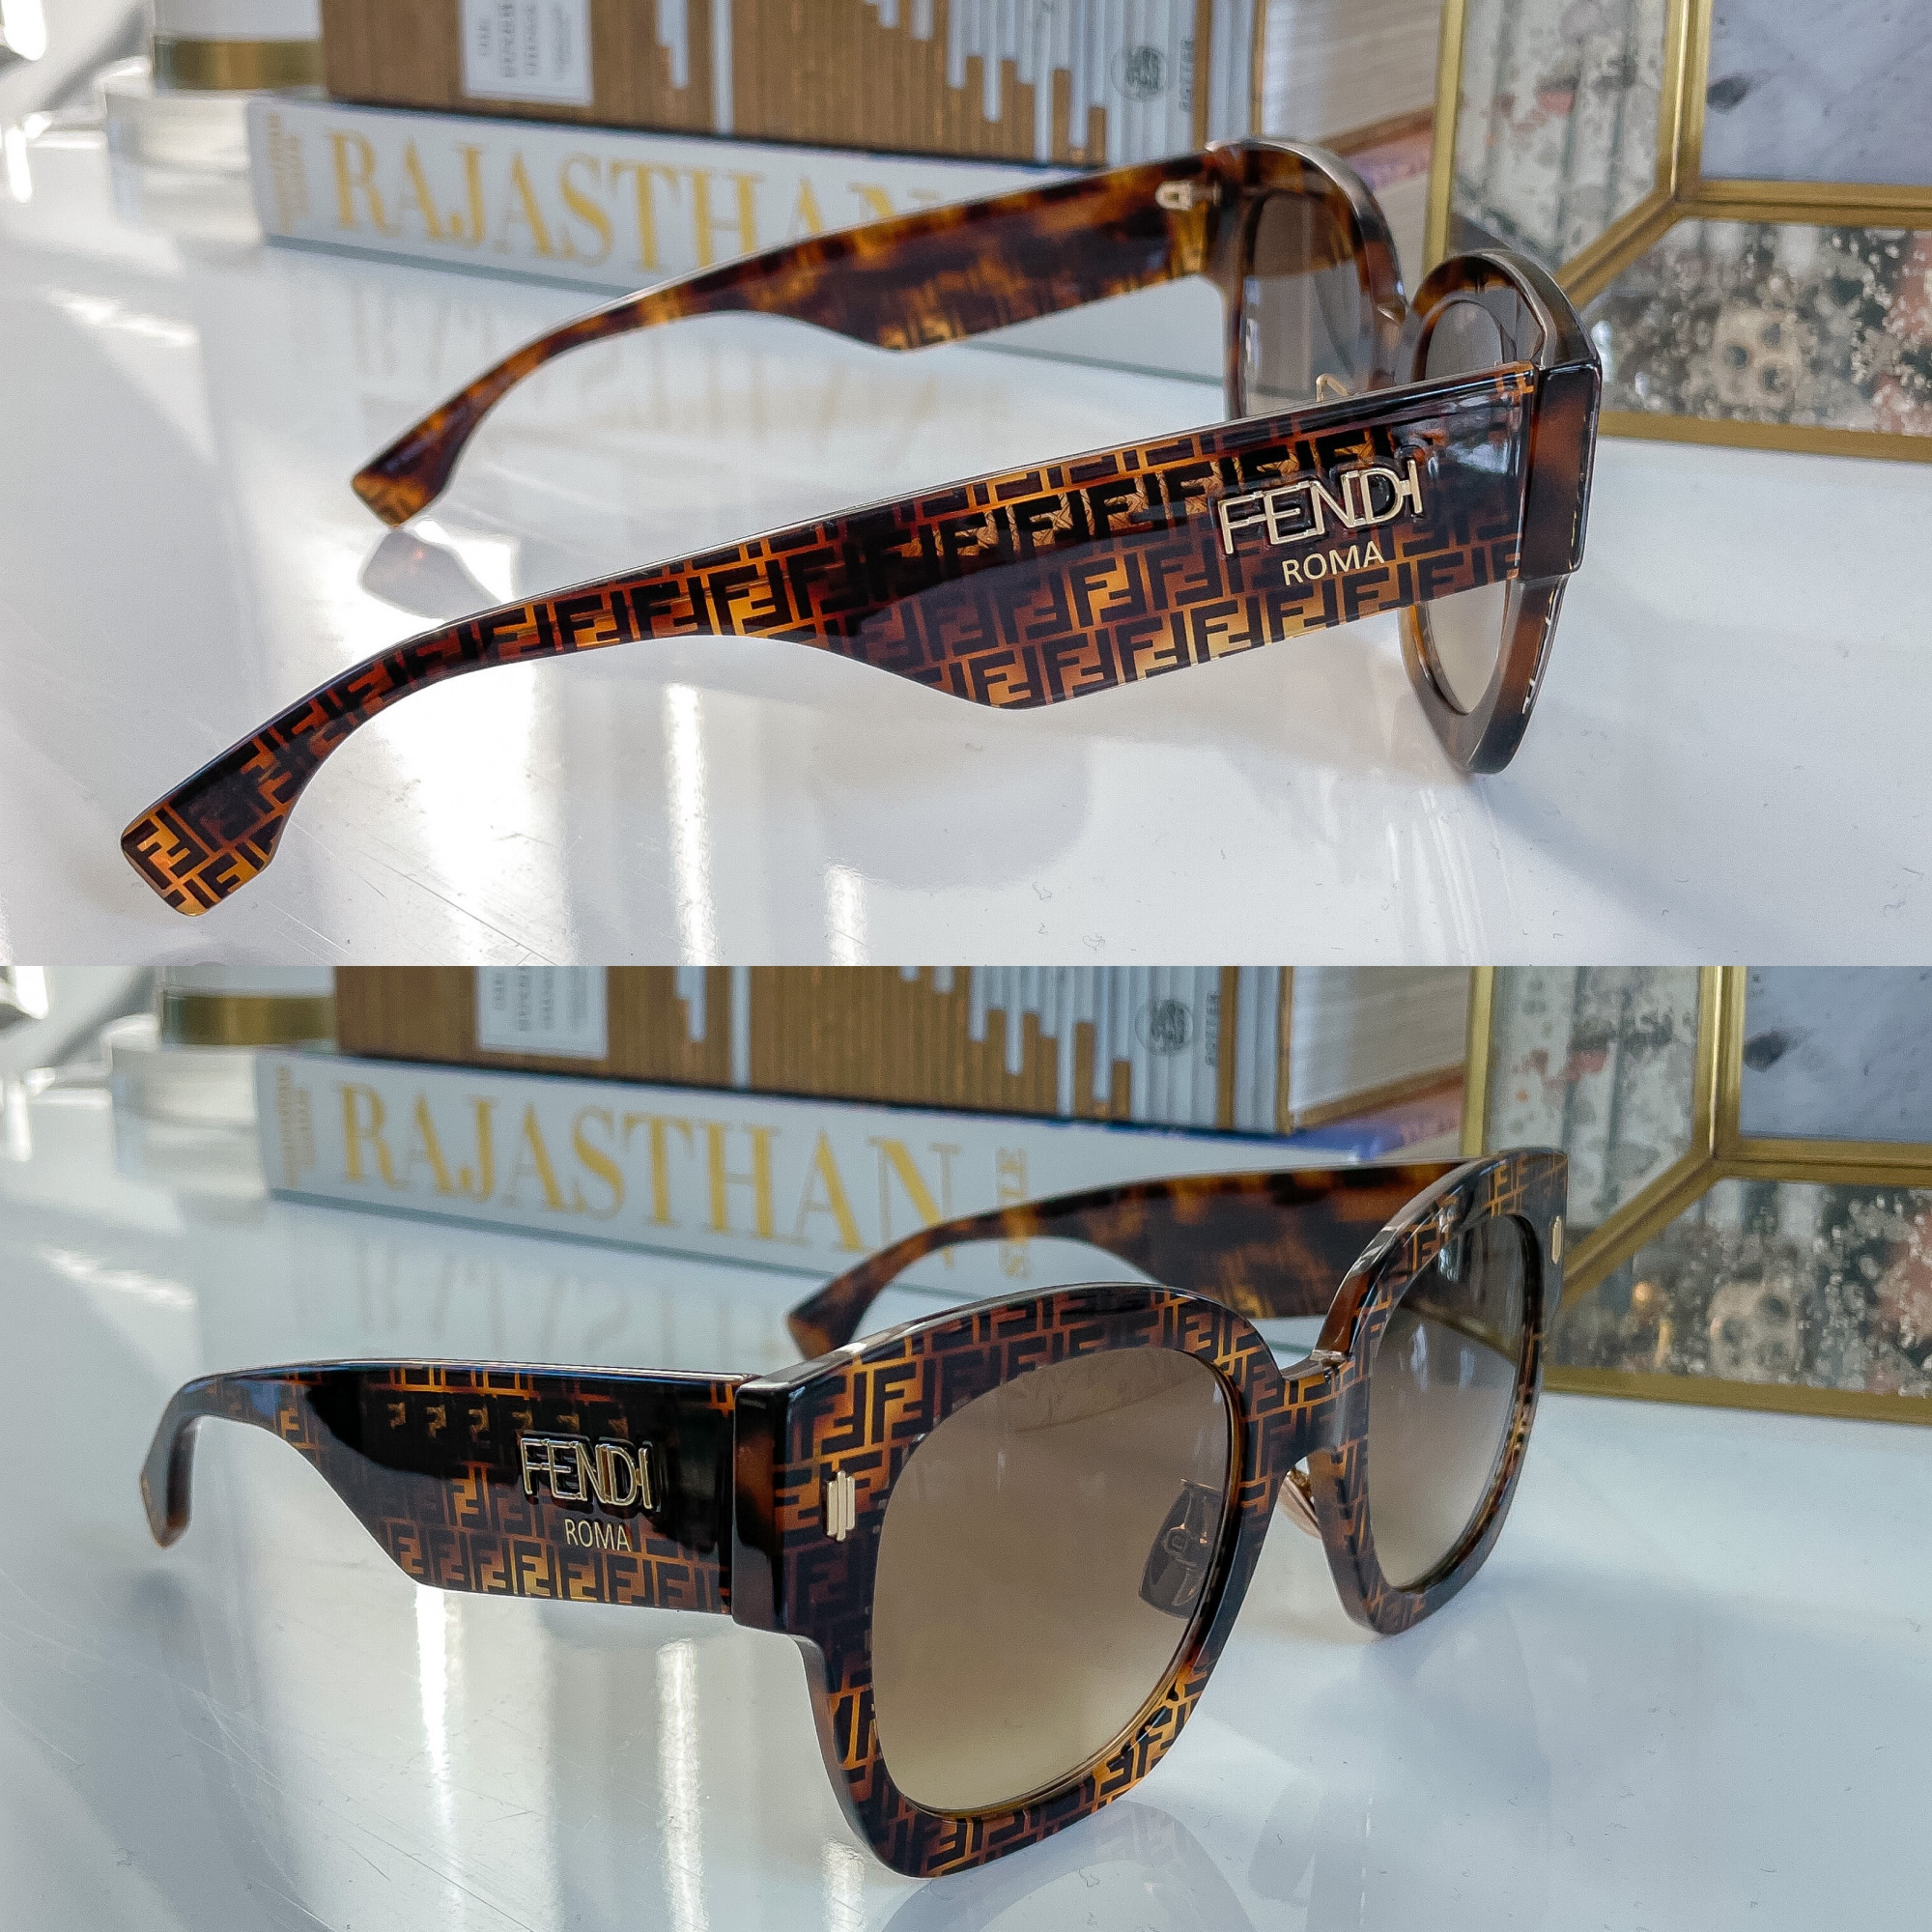 NSALE 2021 fendi sunglasses | Nordstrom Anniversary Sale by popular US fashion blog, The Sweetest Thing: image of Fendi Roma sunglasses. 